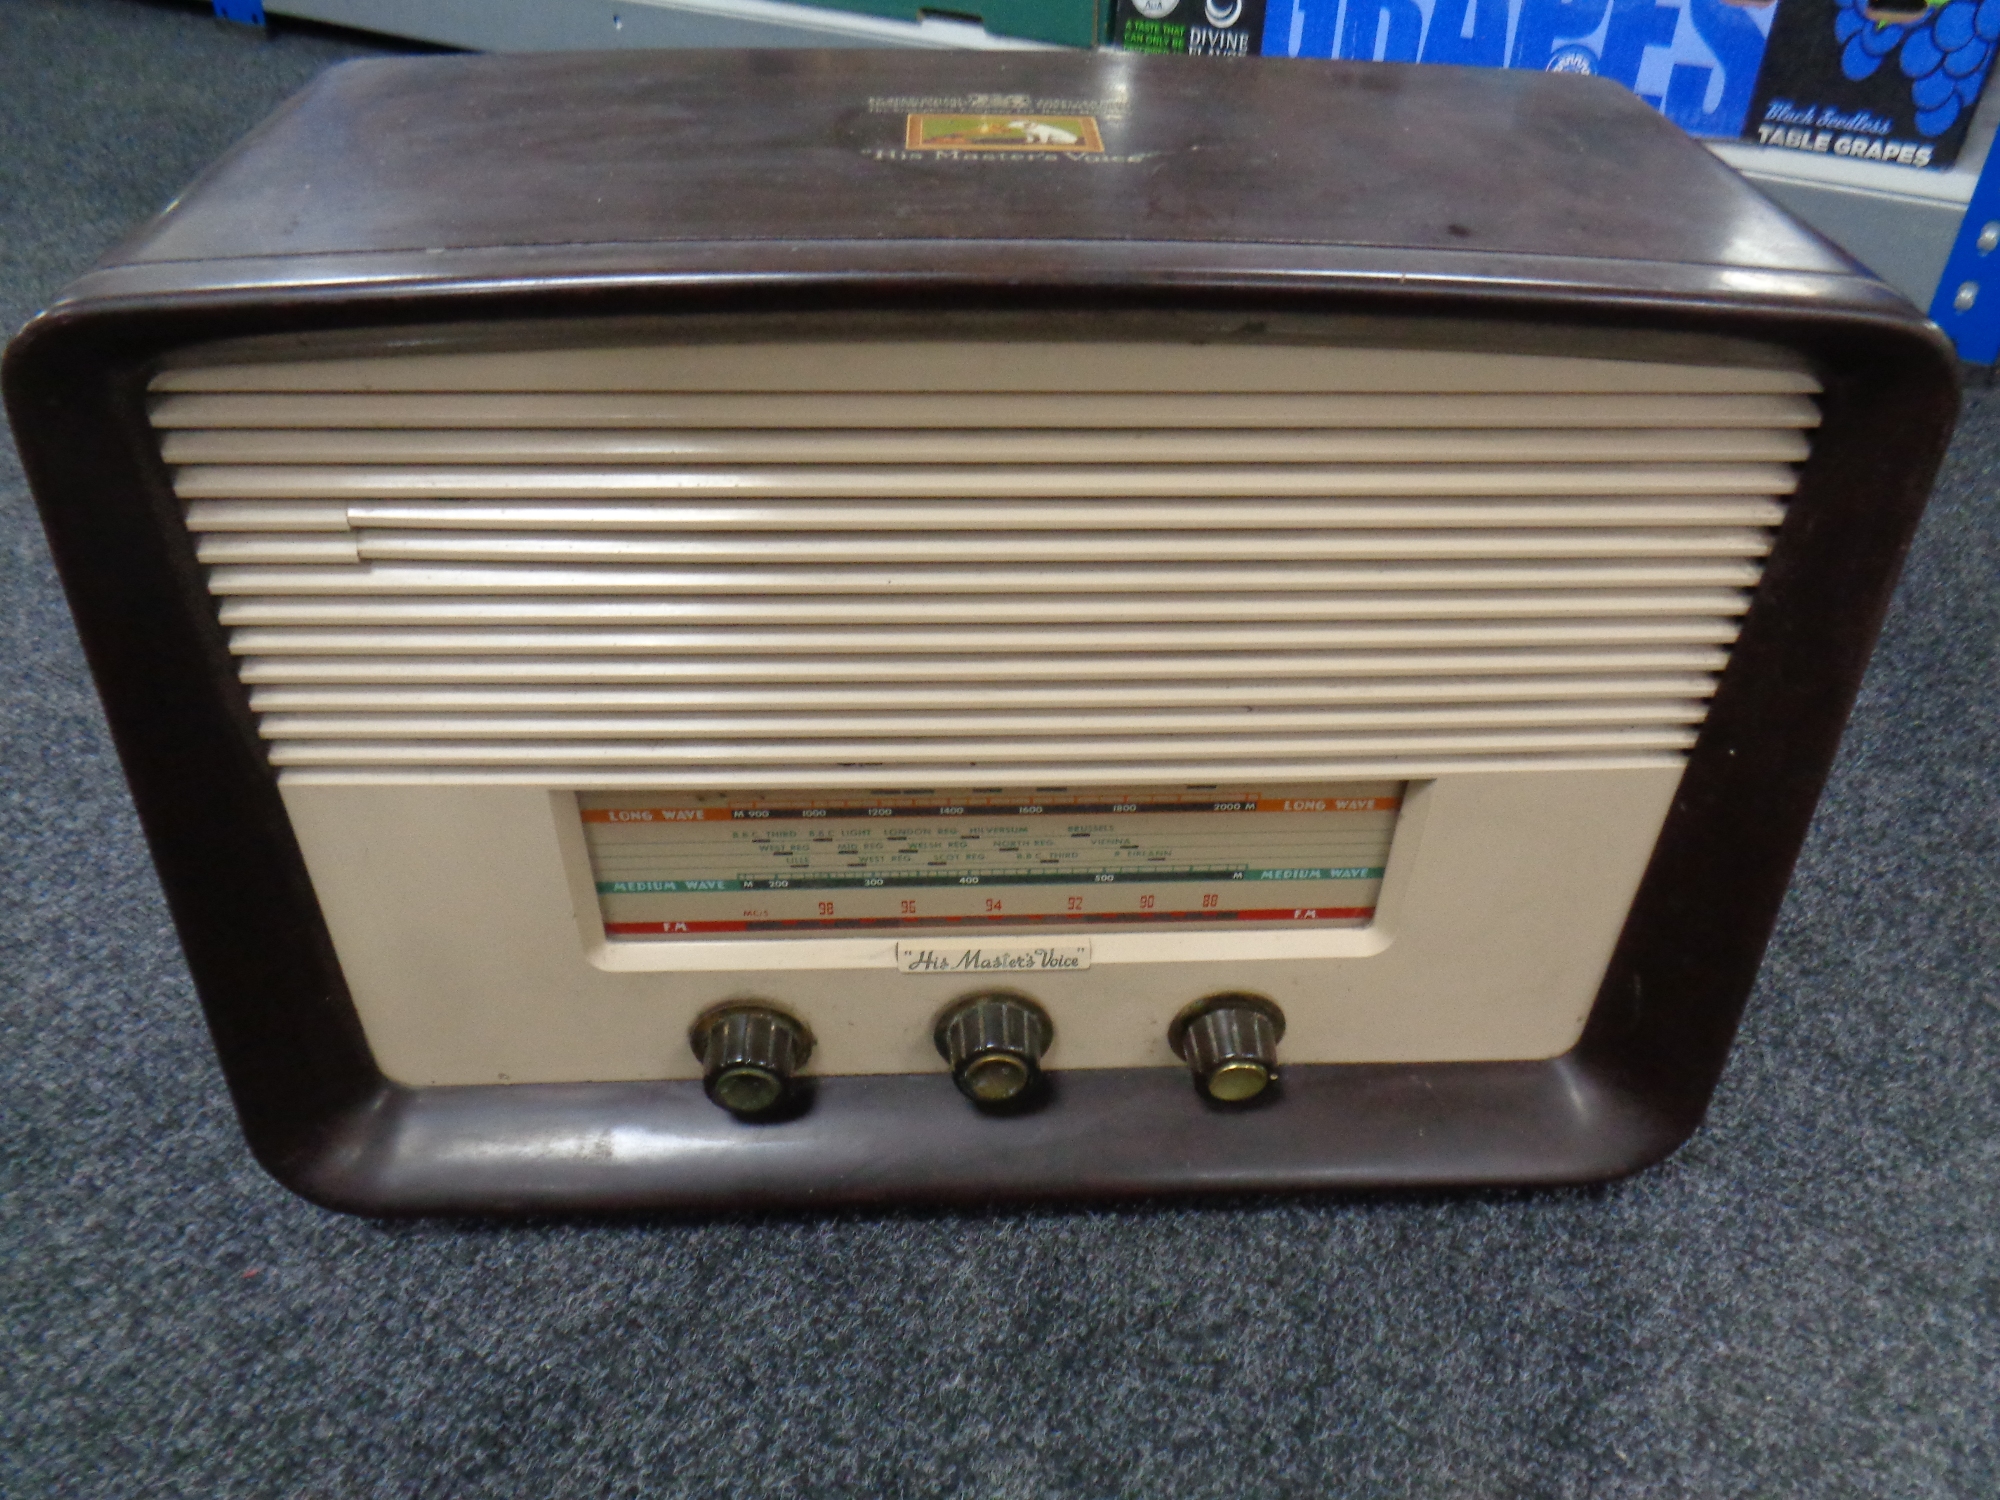 An HMV radio